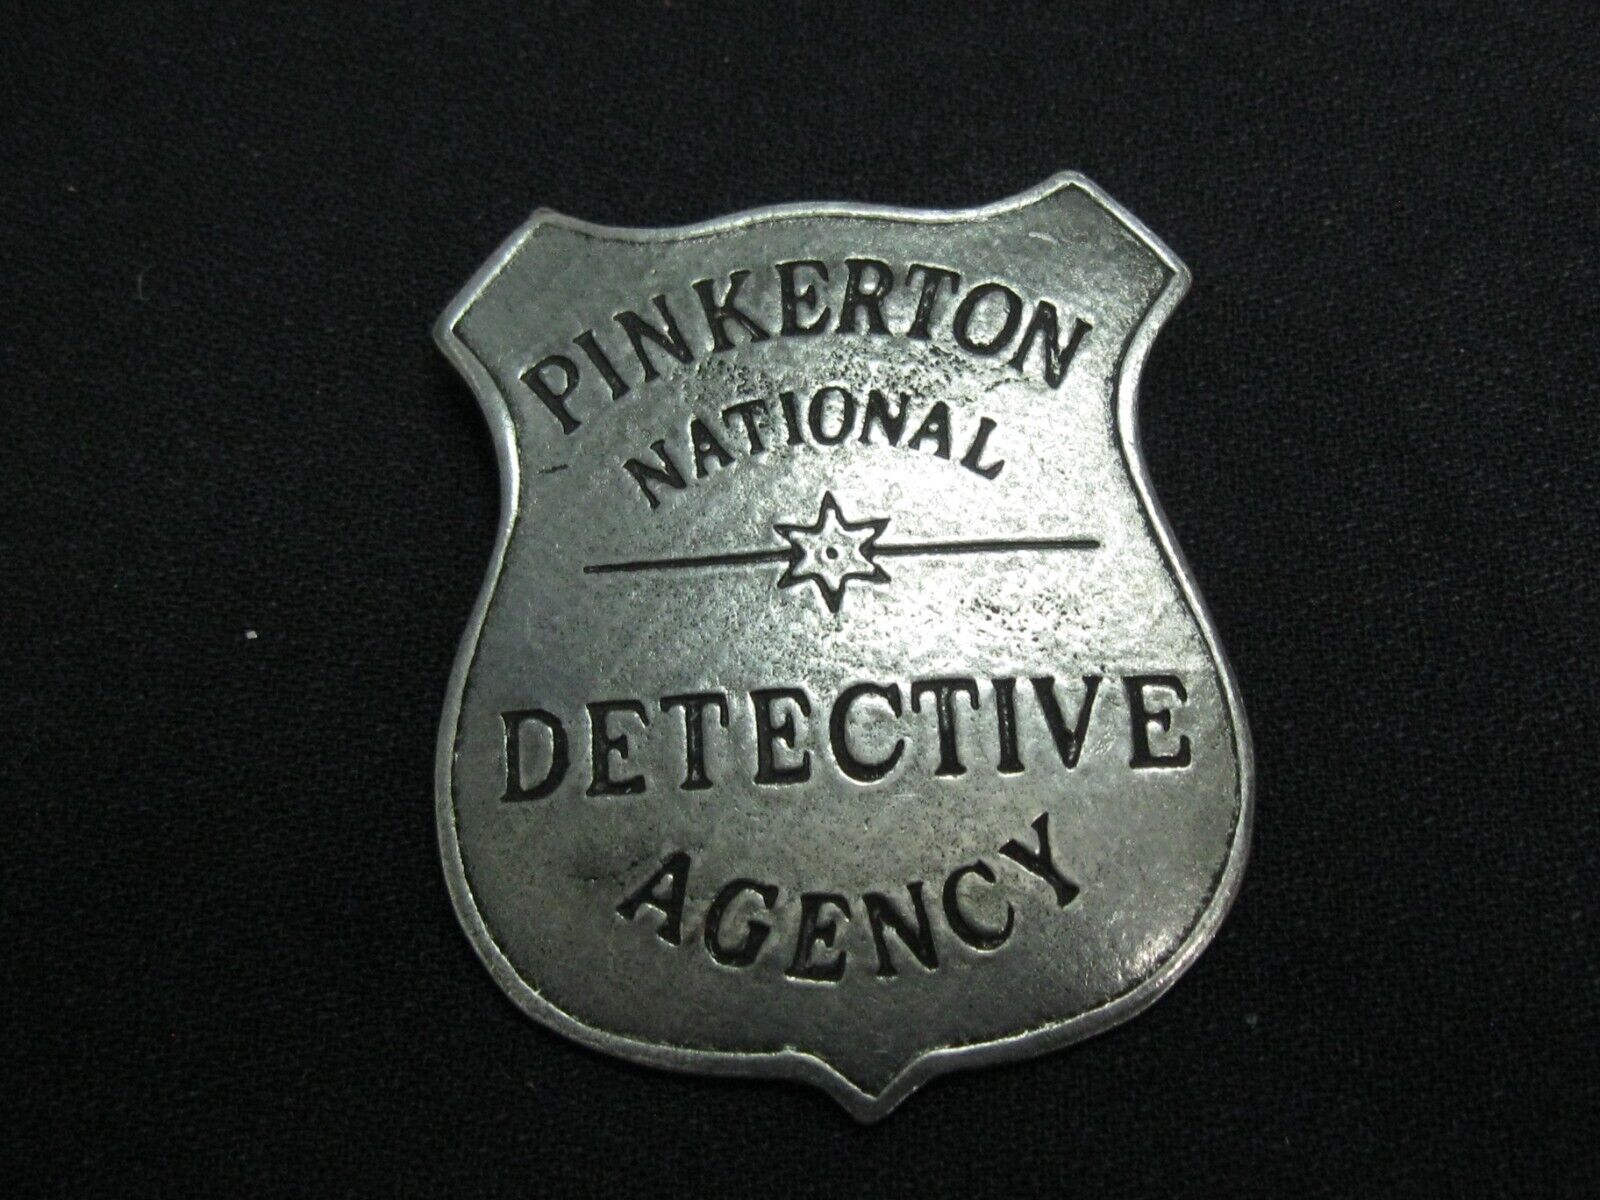 PINKERTON NATIONAL DETECTIVE AGENCY BADGE